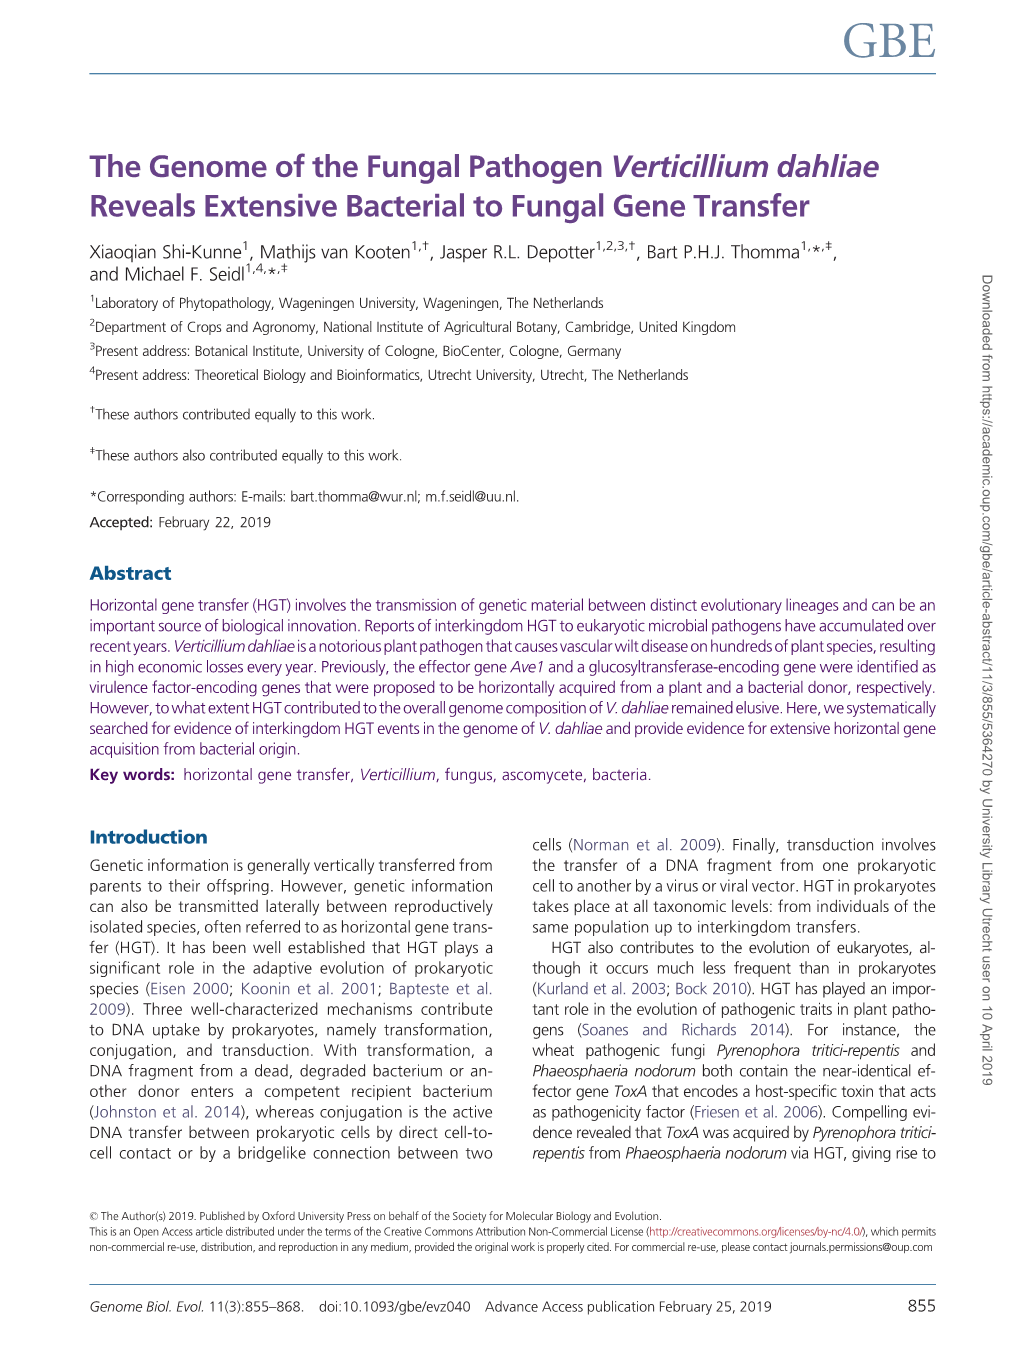 The Genome of the Fungal Pathogen Verticillium Dahliae Reveals Extensive Bacterial to Fungal Gene Transfer